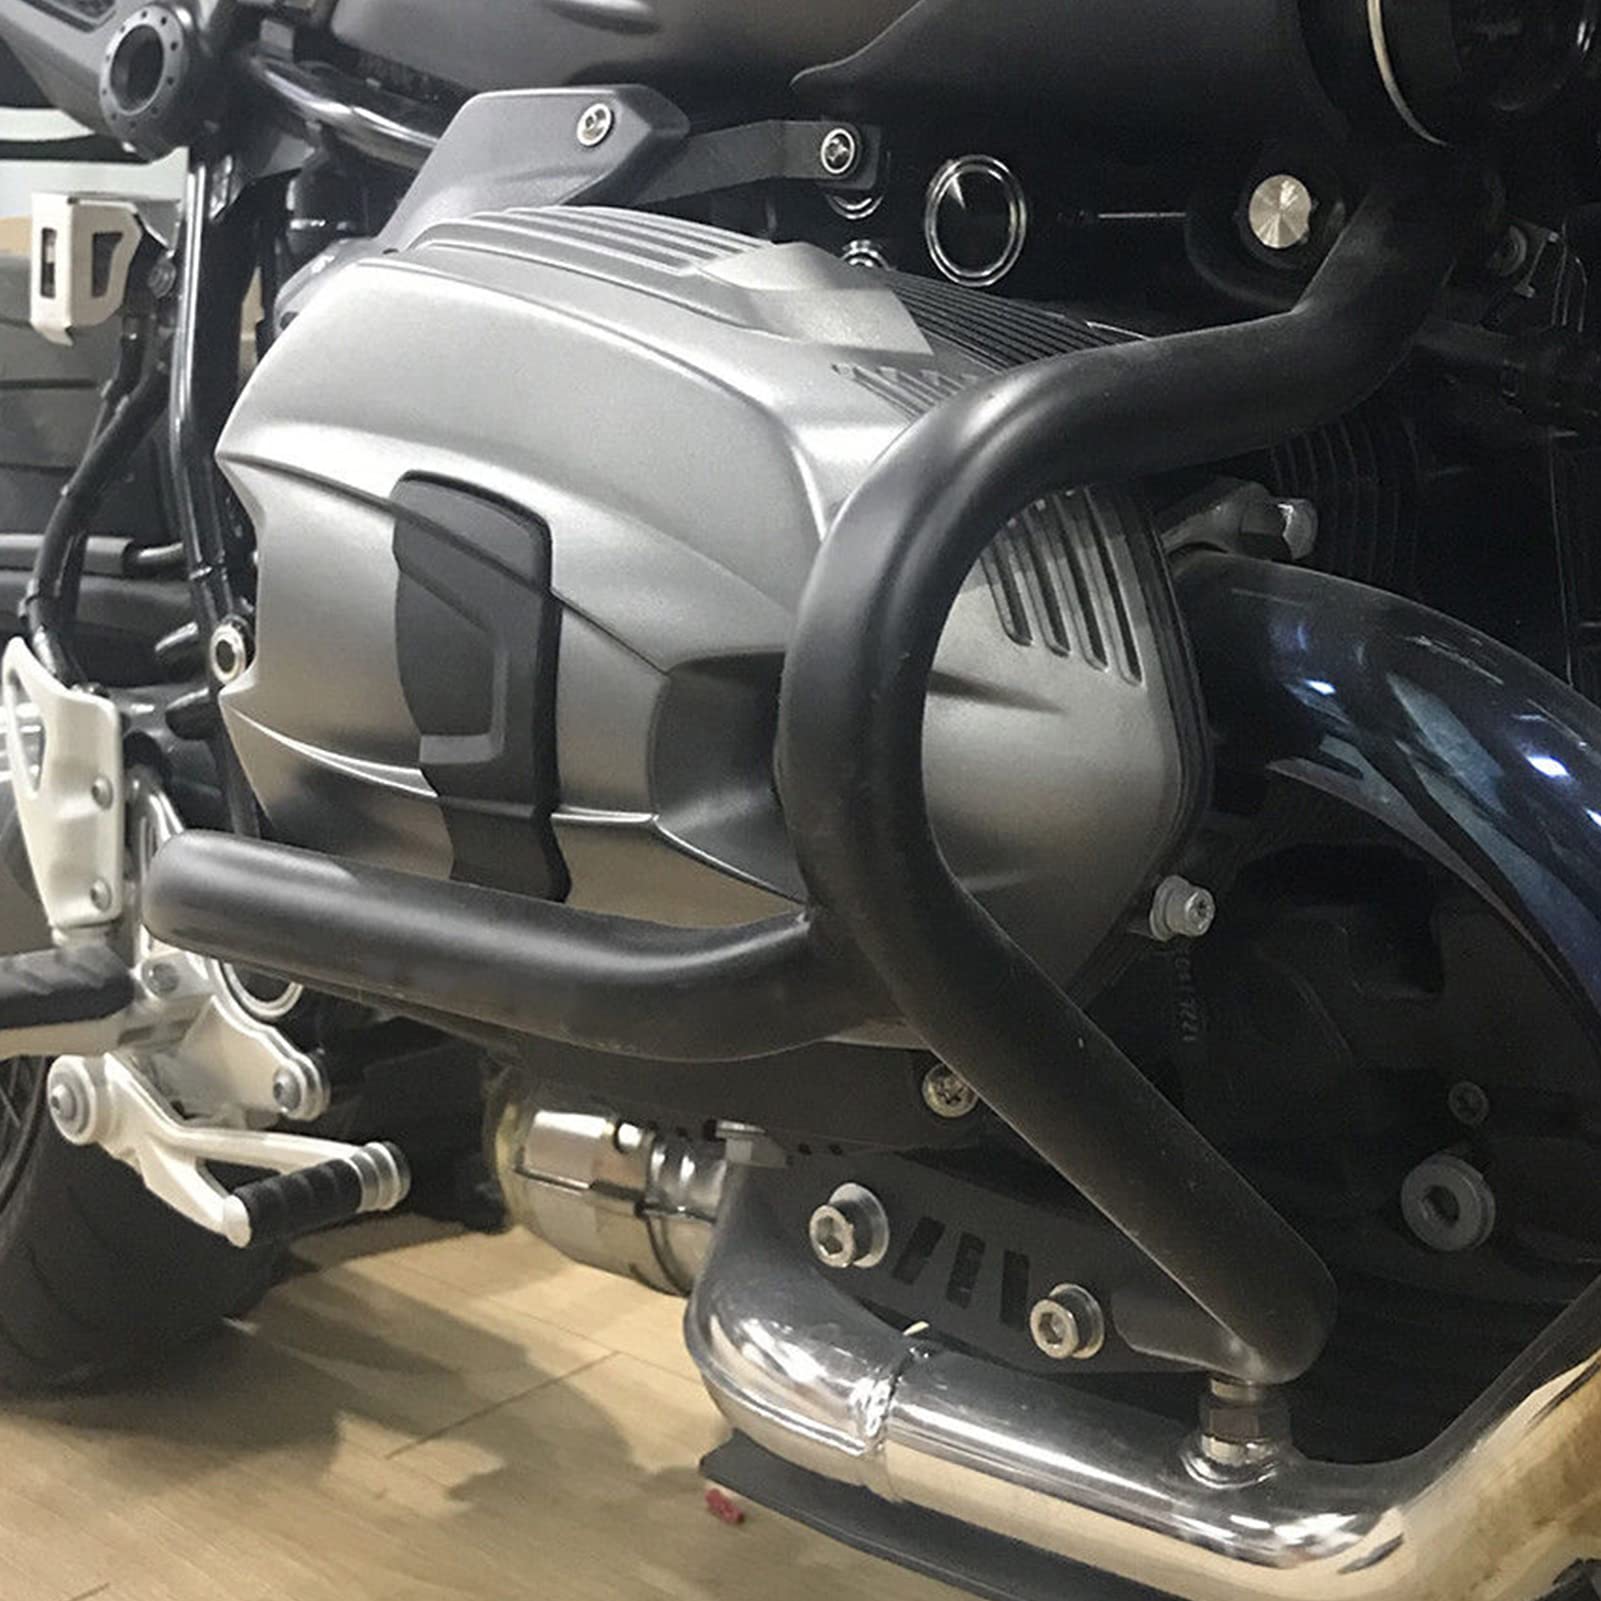 TAZGANTAX Motorrad-Sturzbügel-Motorschutz-Fallschutz, kompatibel mit B.M.W R Nine T RnineT R9T Racer Scrambler Pure Urban G/S 2014 2015 2016 2017 2018 2019 2020 2021 2022 2023 Stunt Subcage von TAZGANTAX